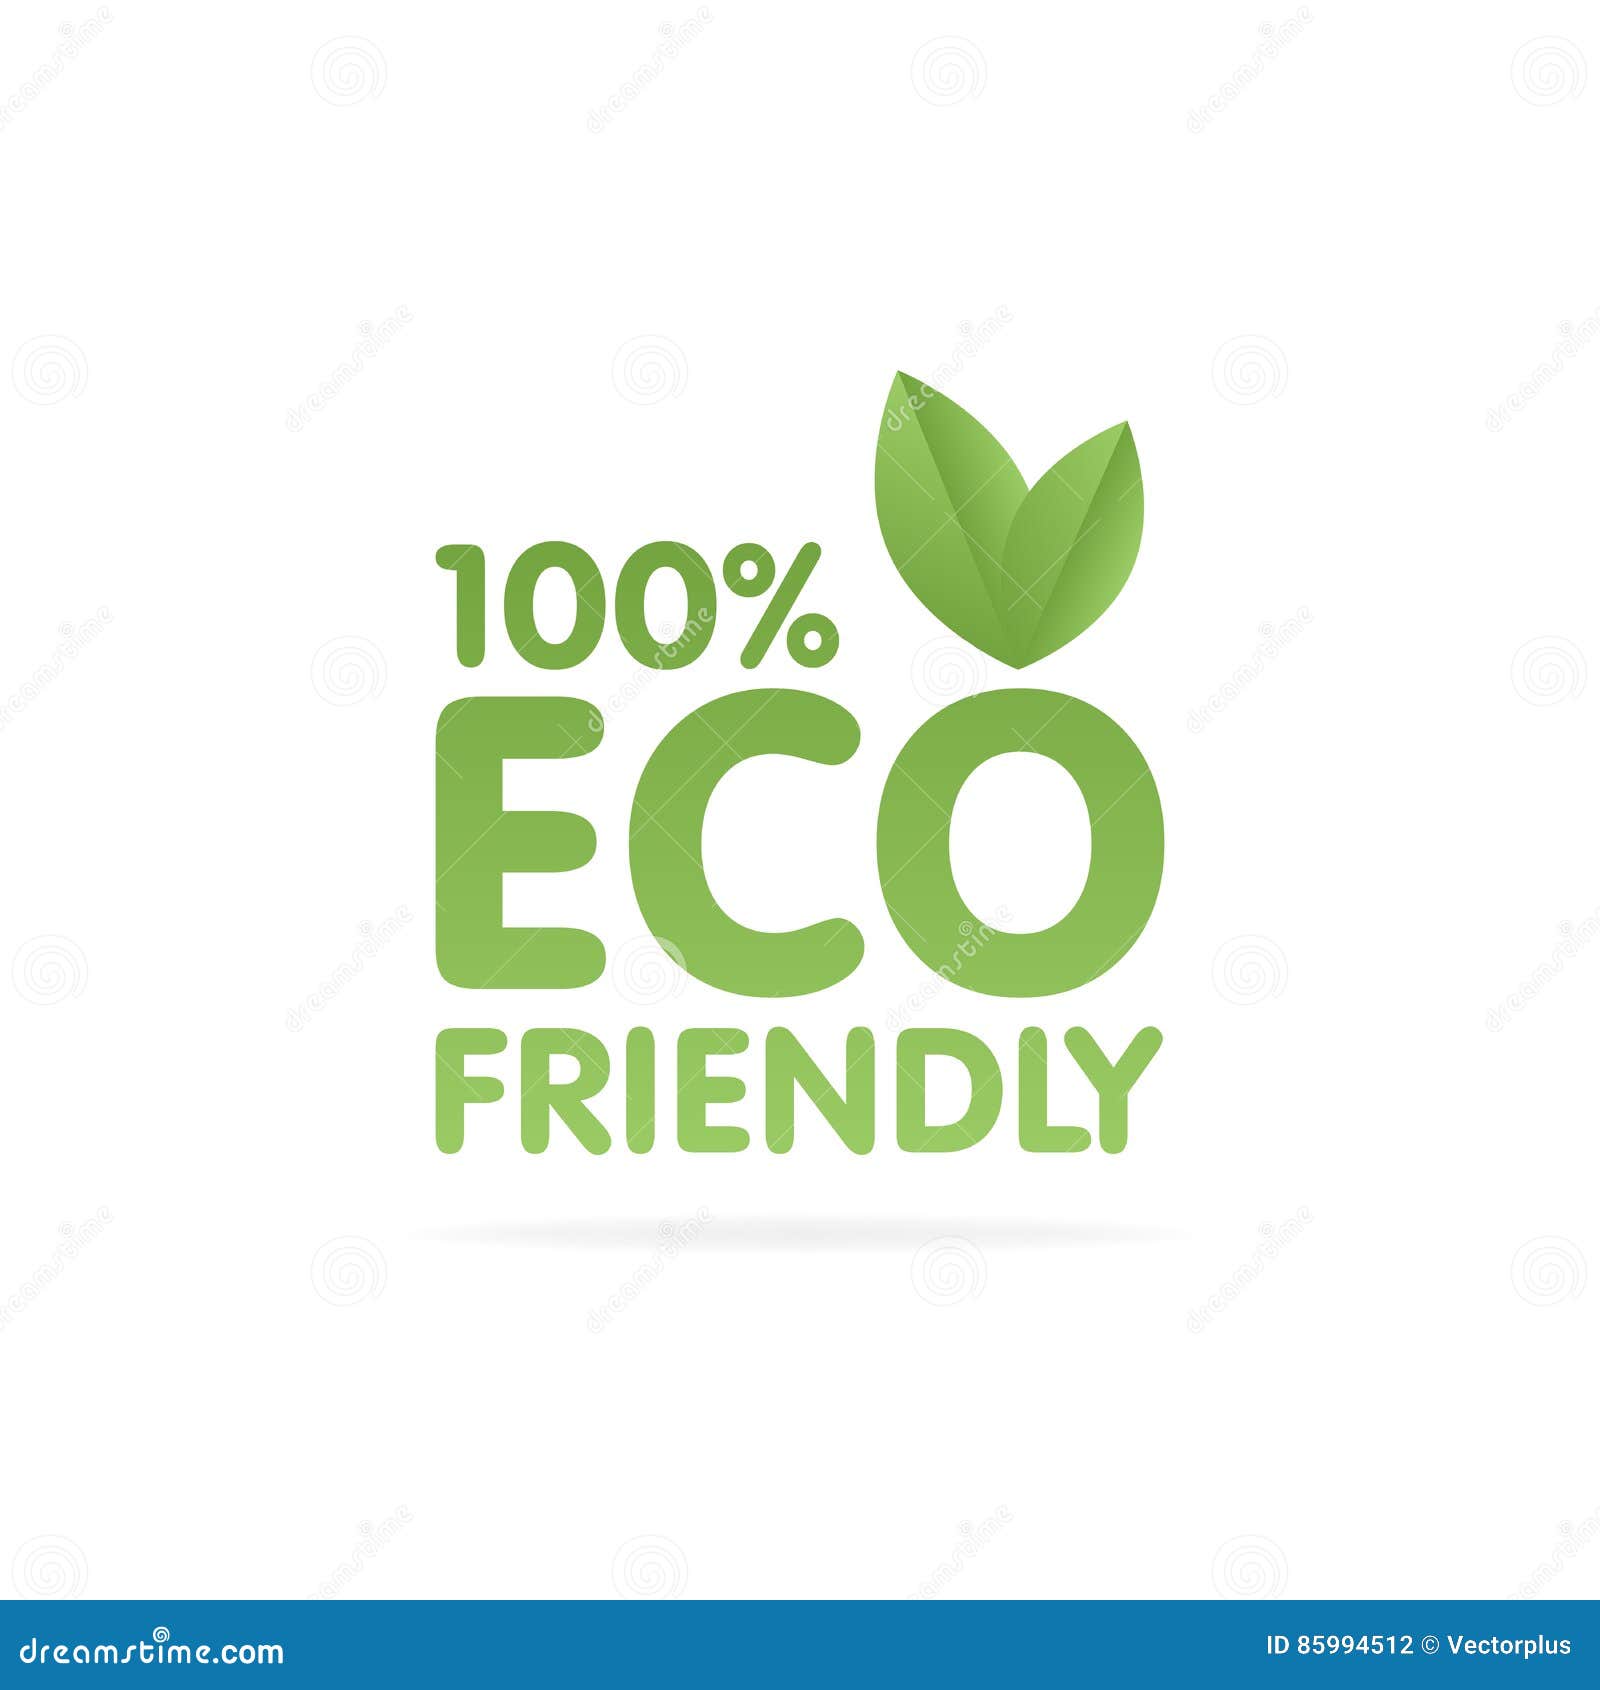 Френдли перевод. Eco надпись. Значок Eco friendly. Эко френдли логотип. Наклейка эко френдли.